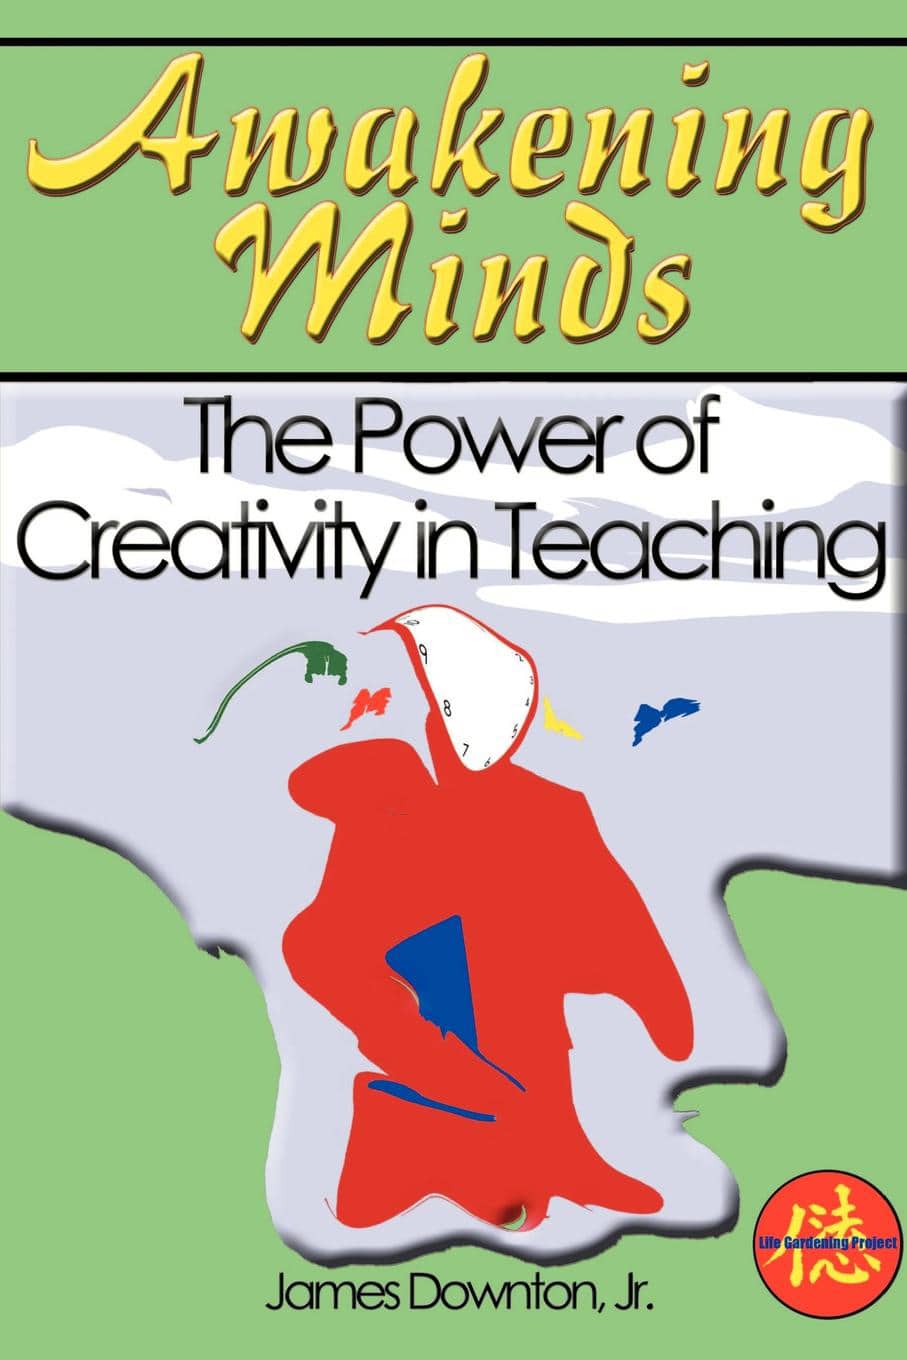 Awakening Minds: The Power of Creativity In Teaching book cover photo